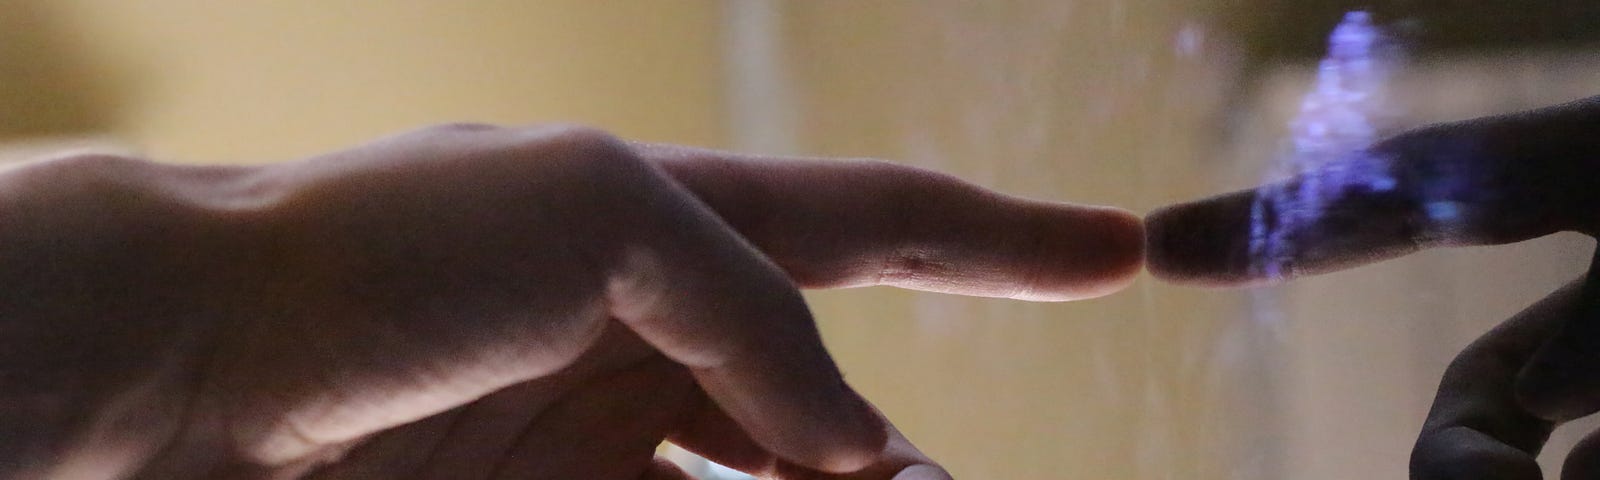 Finger touching glass